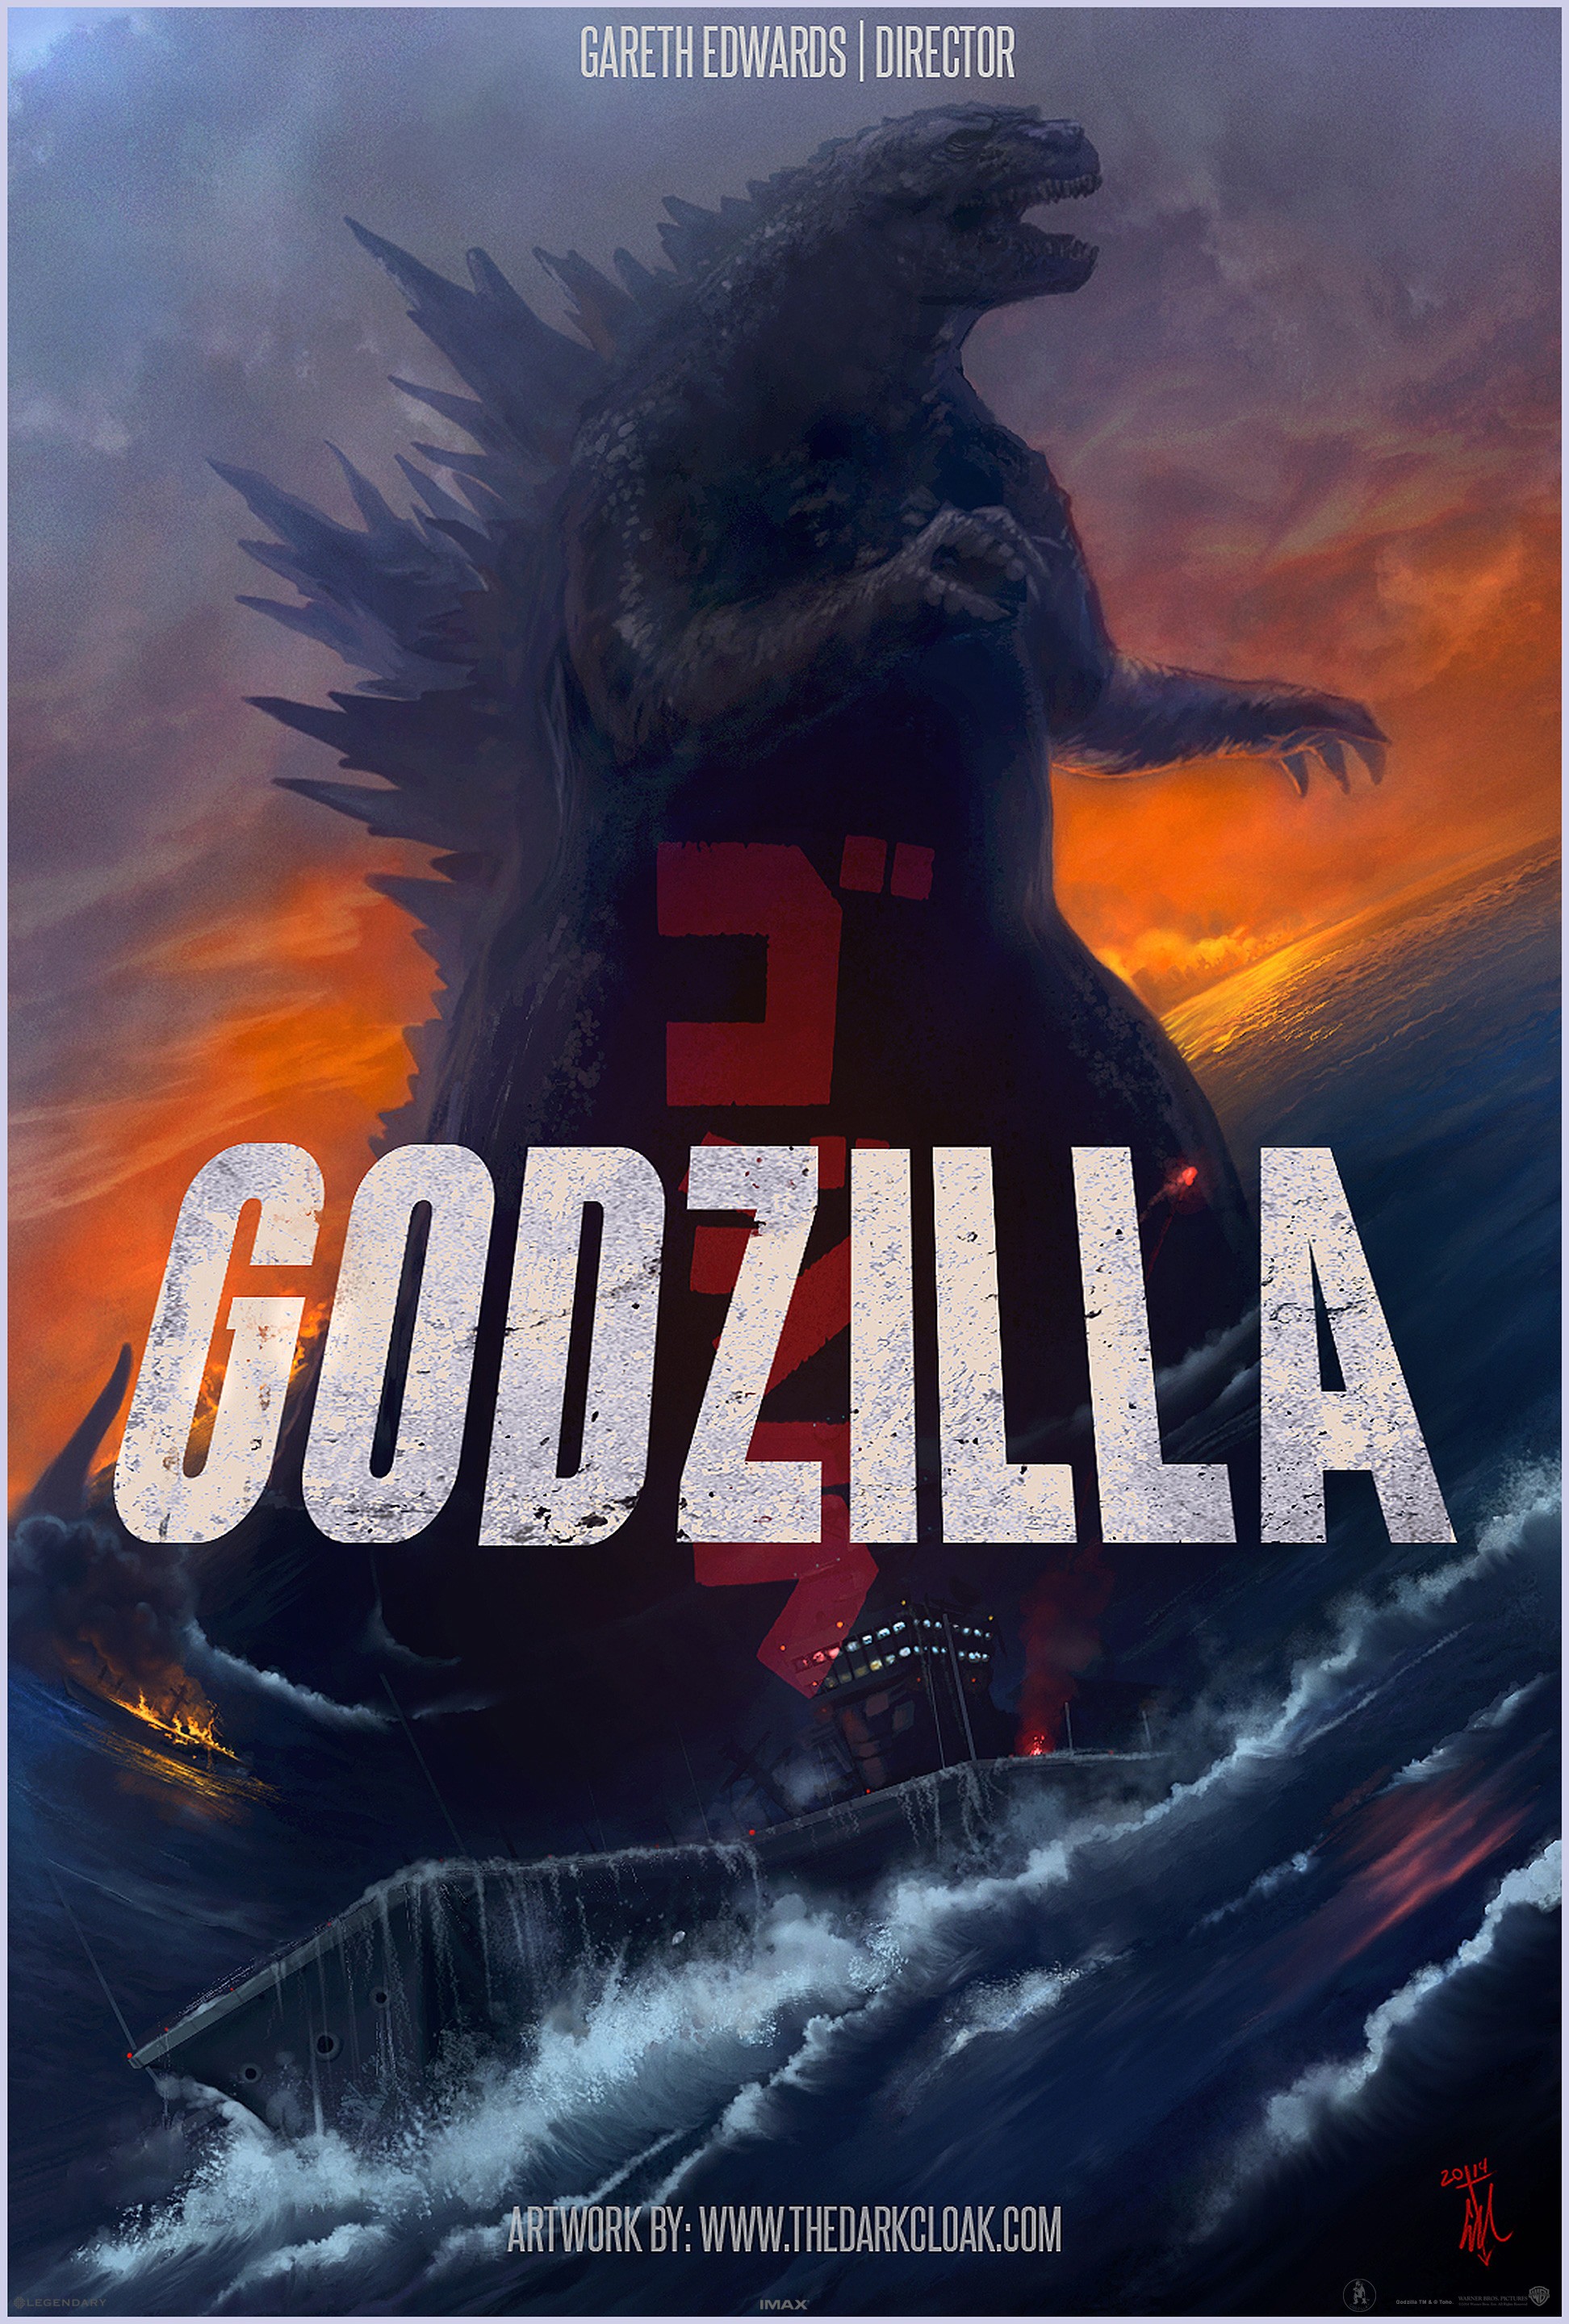 Fan-made Godzilla Movie Posters | Time